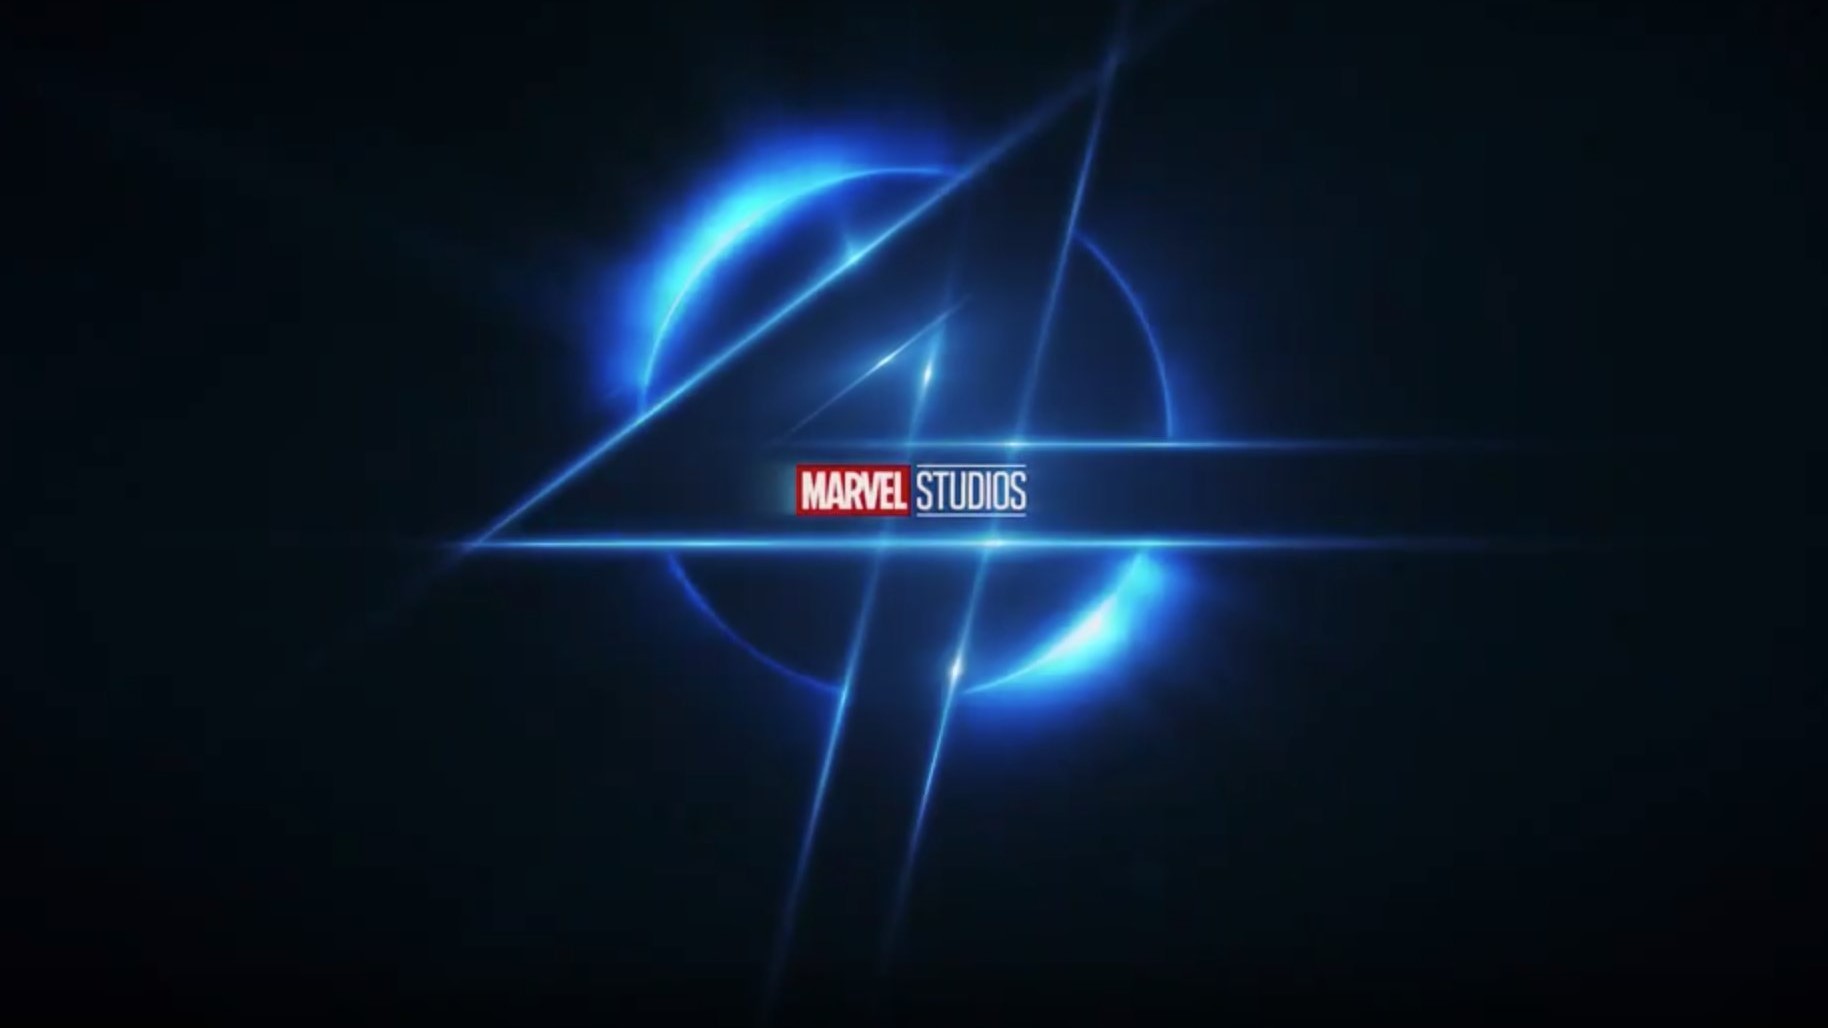 The Marvel Studios Fantastic Four logo